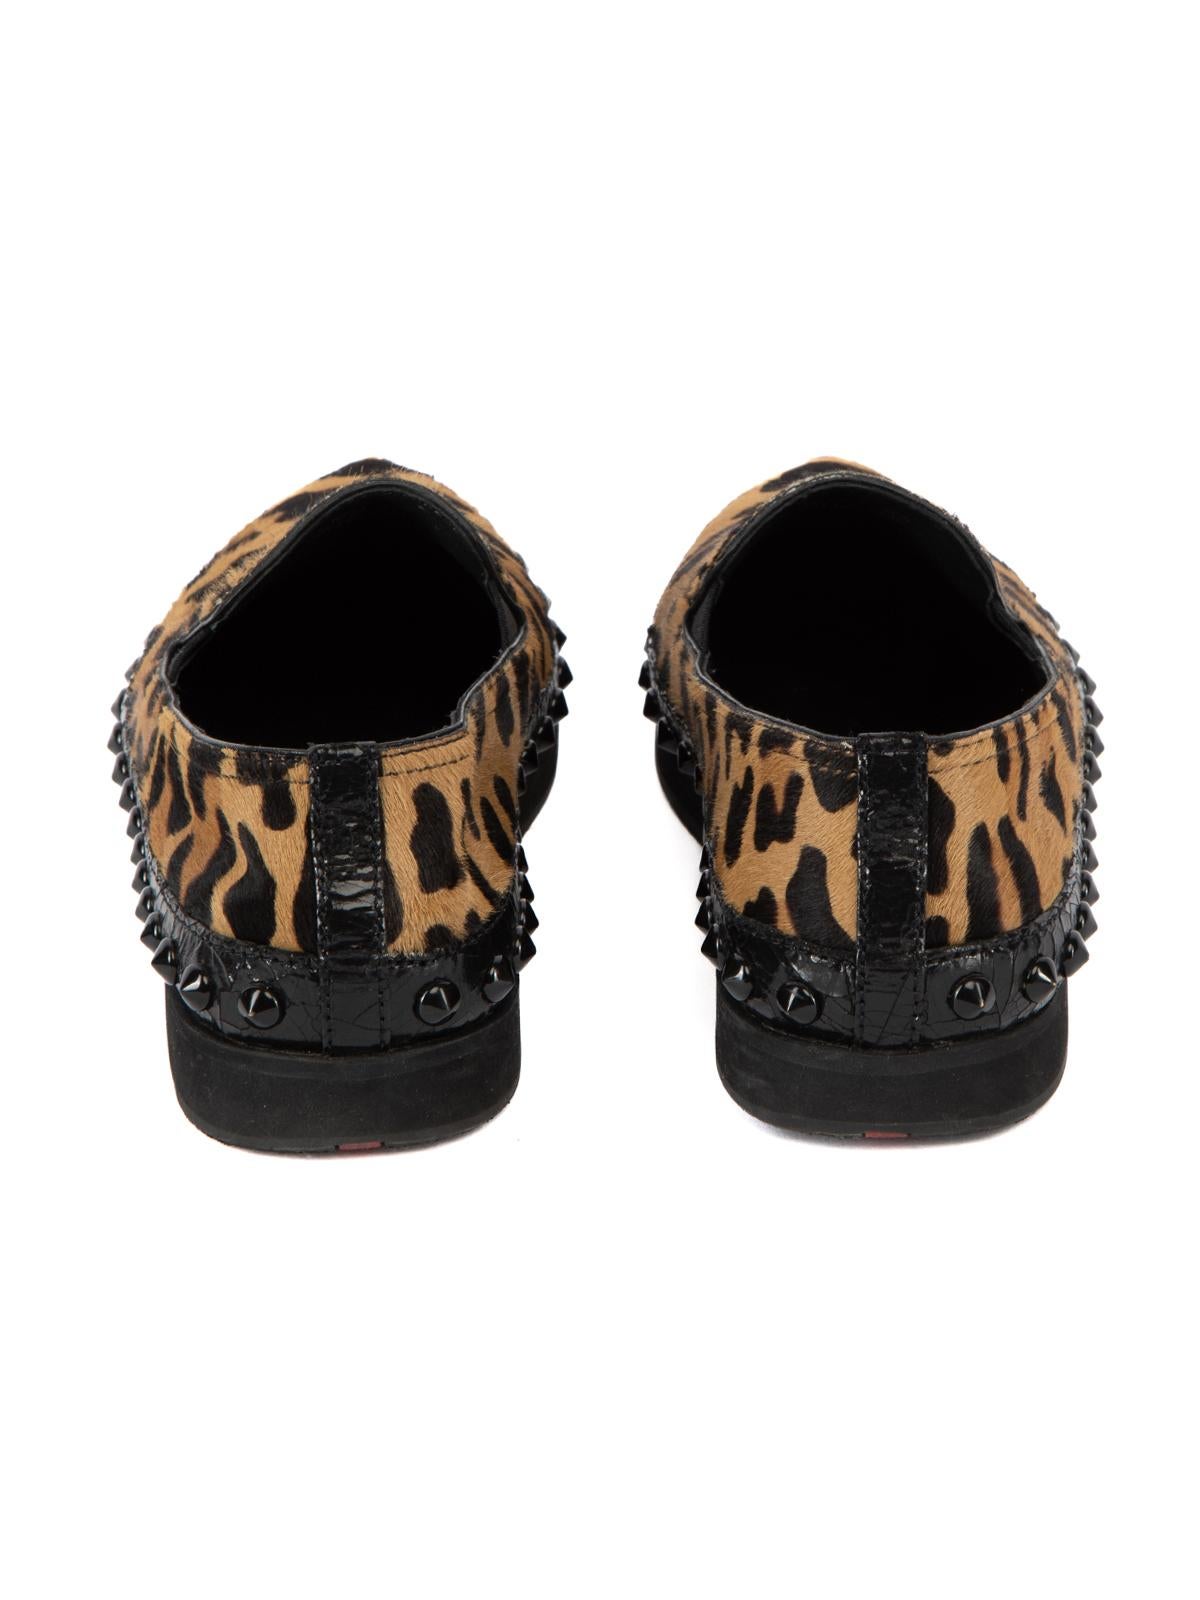 Pre-Loved Prada Women's Cheetah Loafers 1